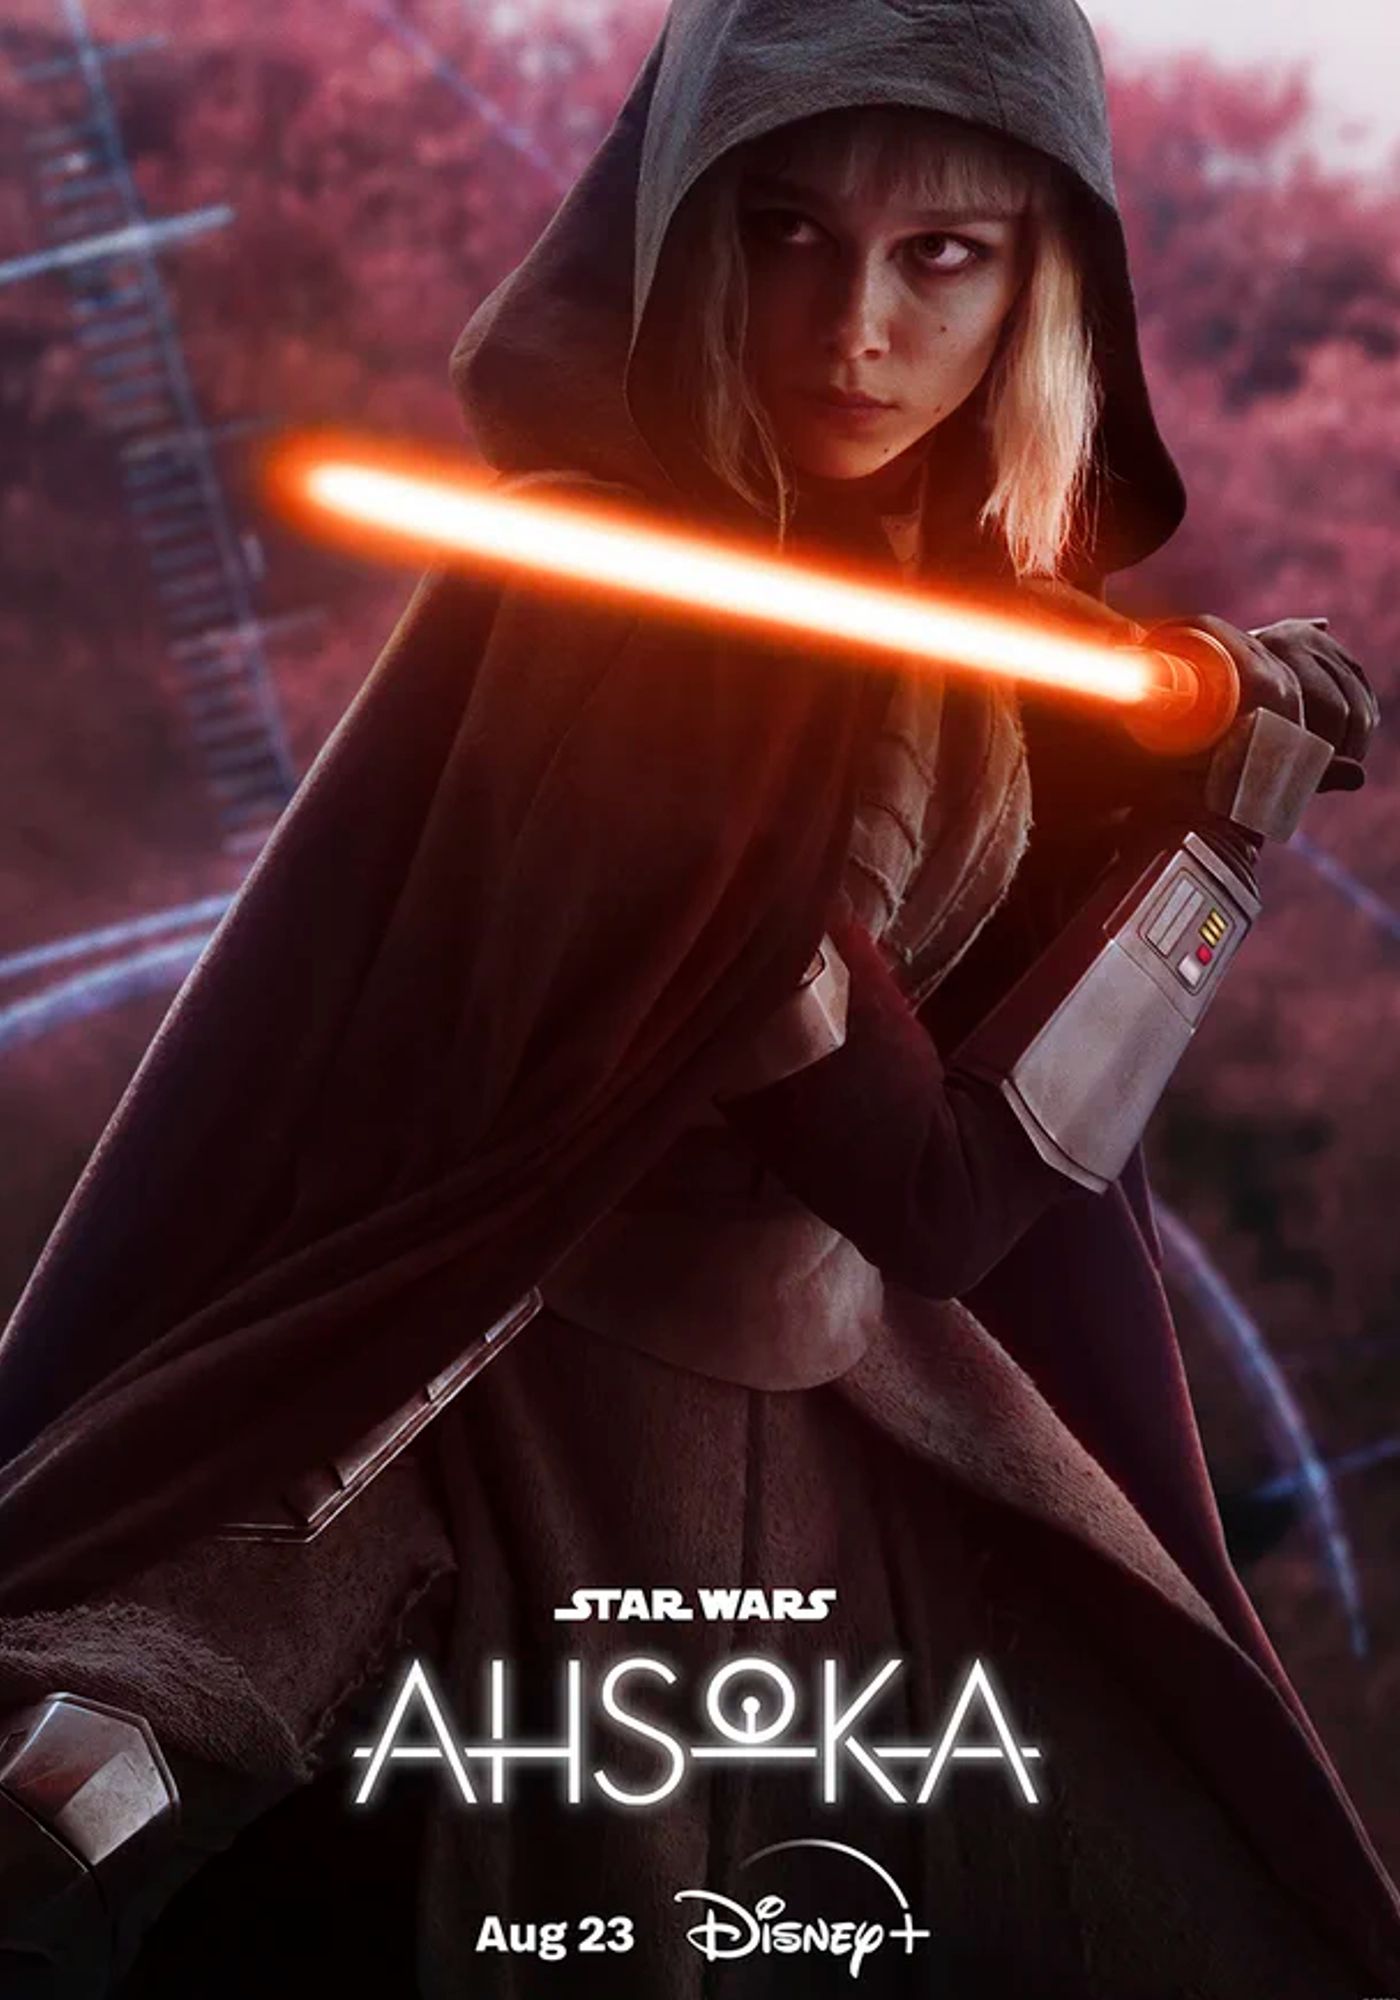 Stunning Ahsoka Character Posters Celebrate Star Wars' Sinister New